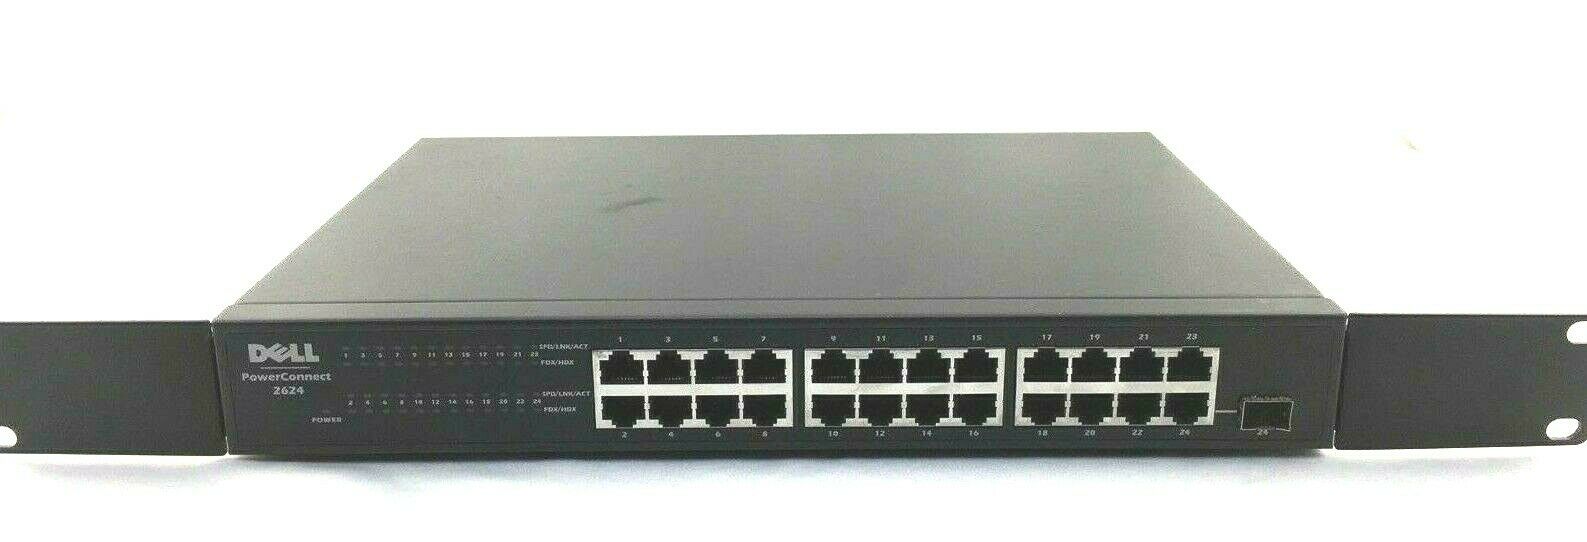 Dell PowerConnect 2624 24-Port Gigabit Ethernet Switch Rack Mount